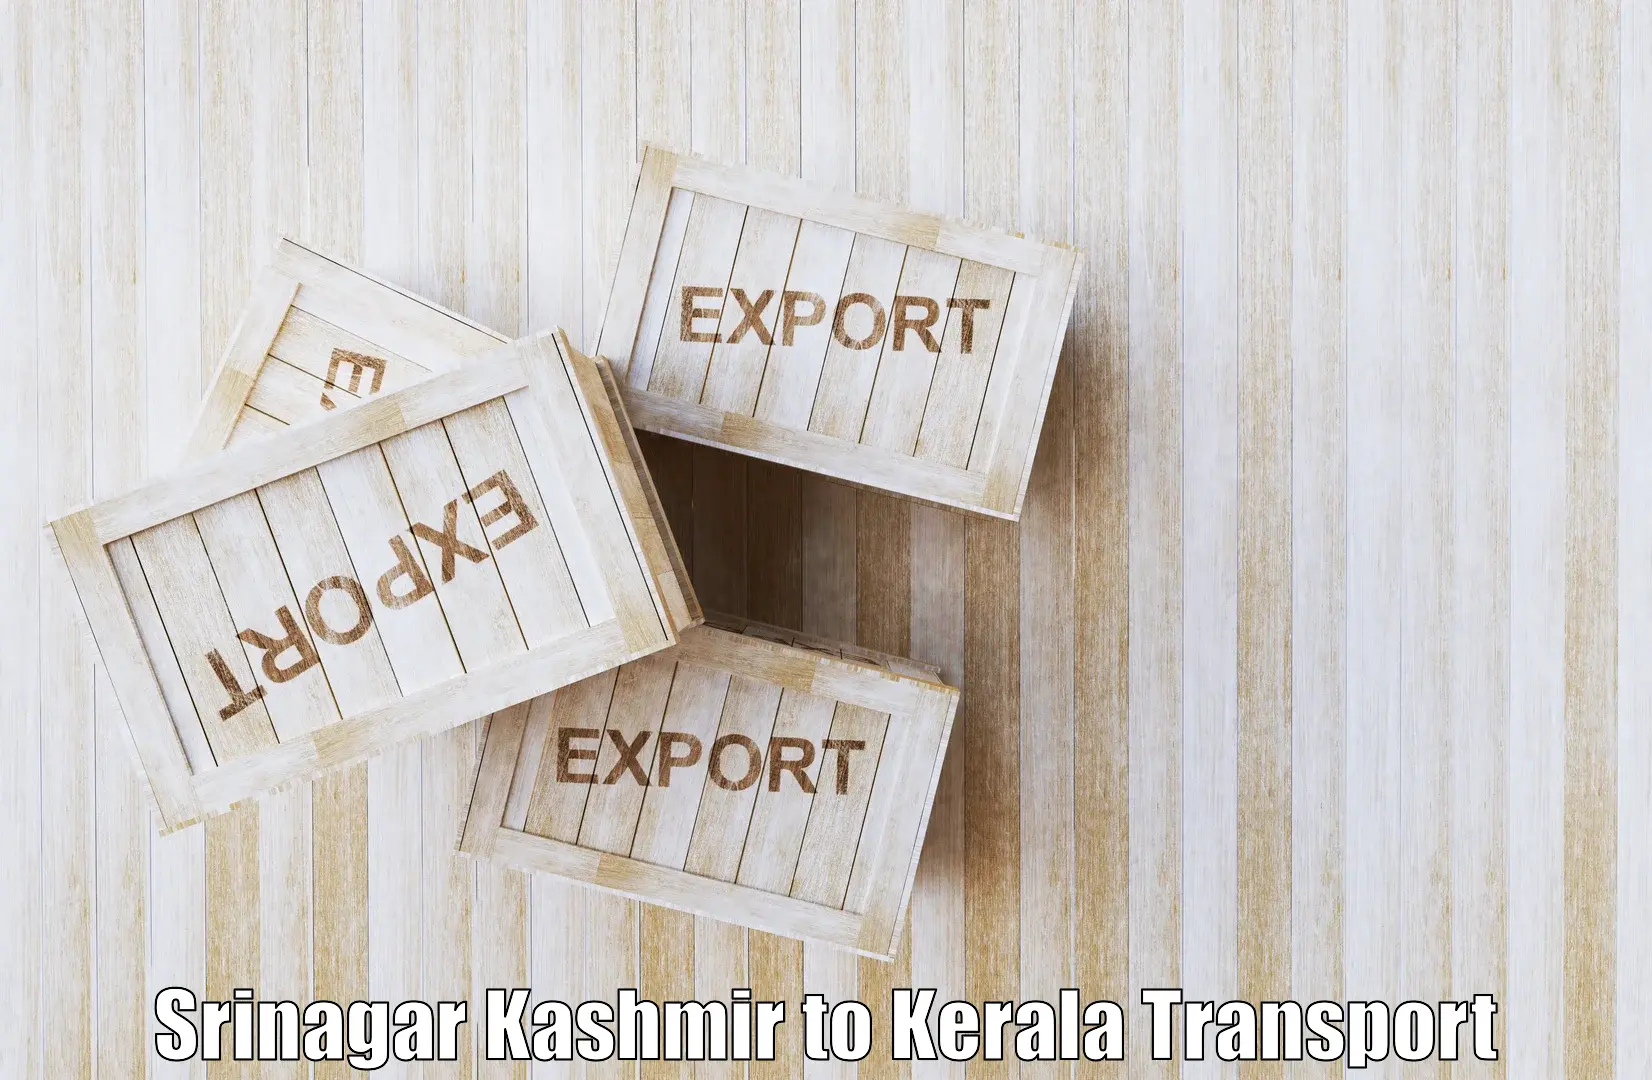 Online transport service Srinagar Kashmir to Kerala